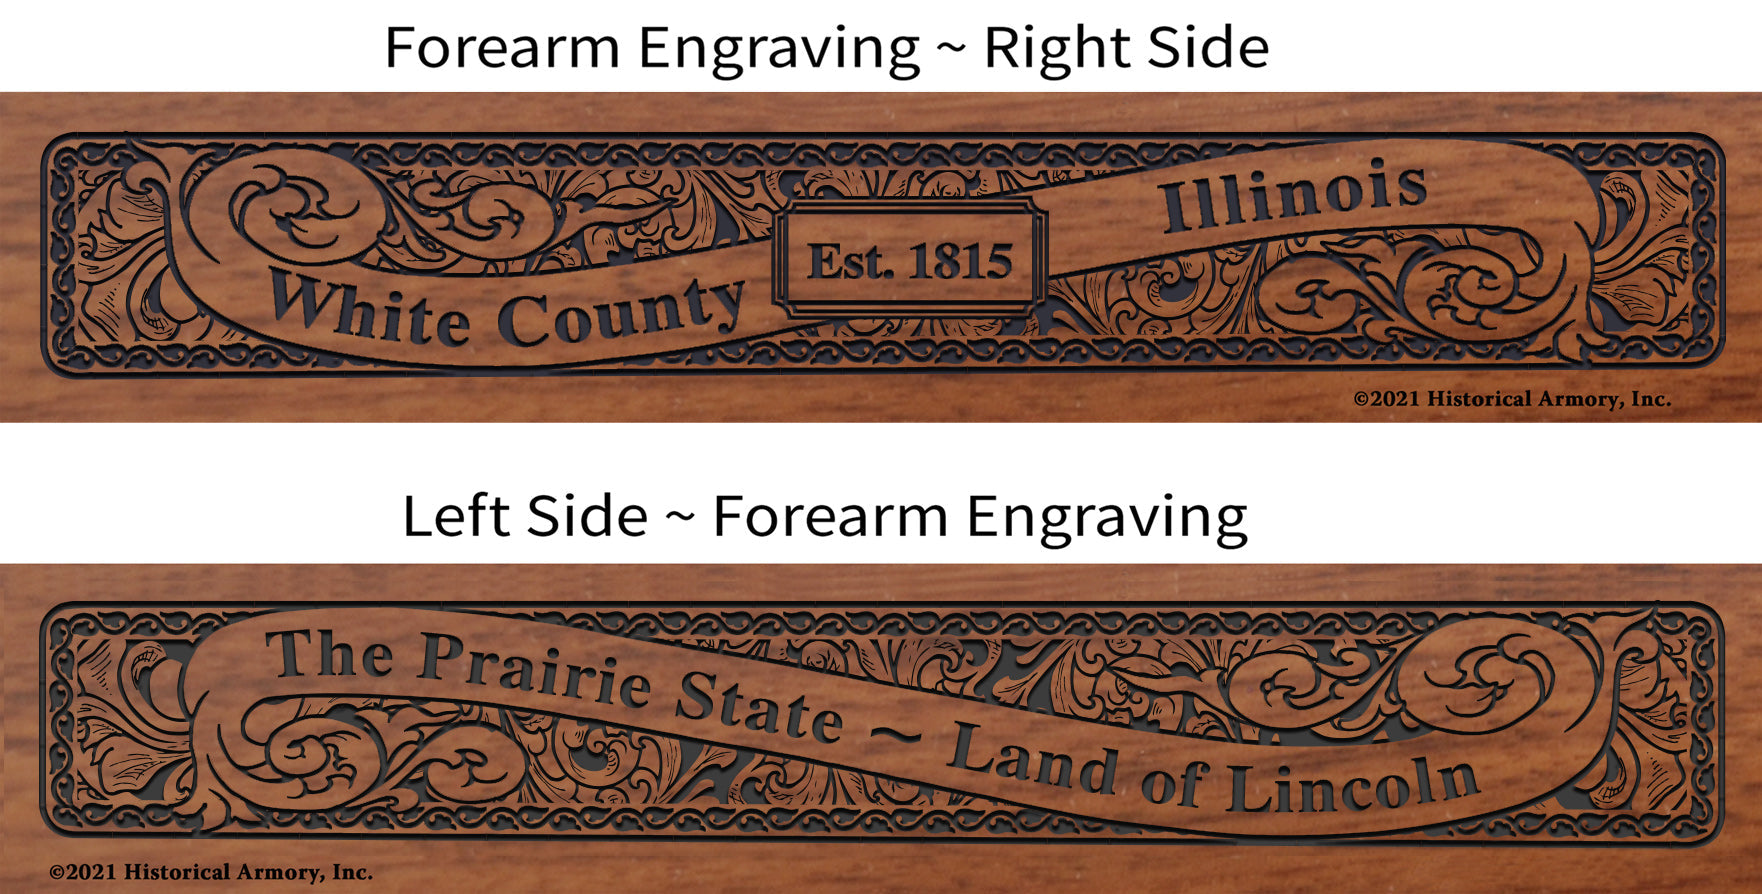 White County Illinois Establishment and Motto History Engraved Rifle Forearm